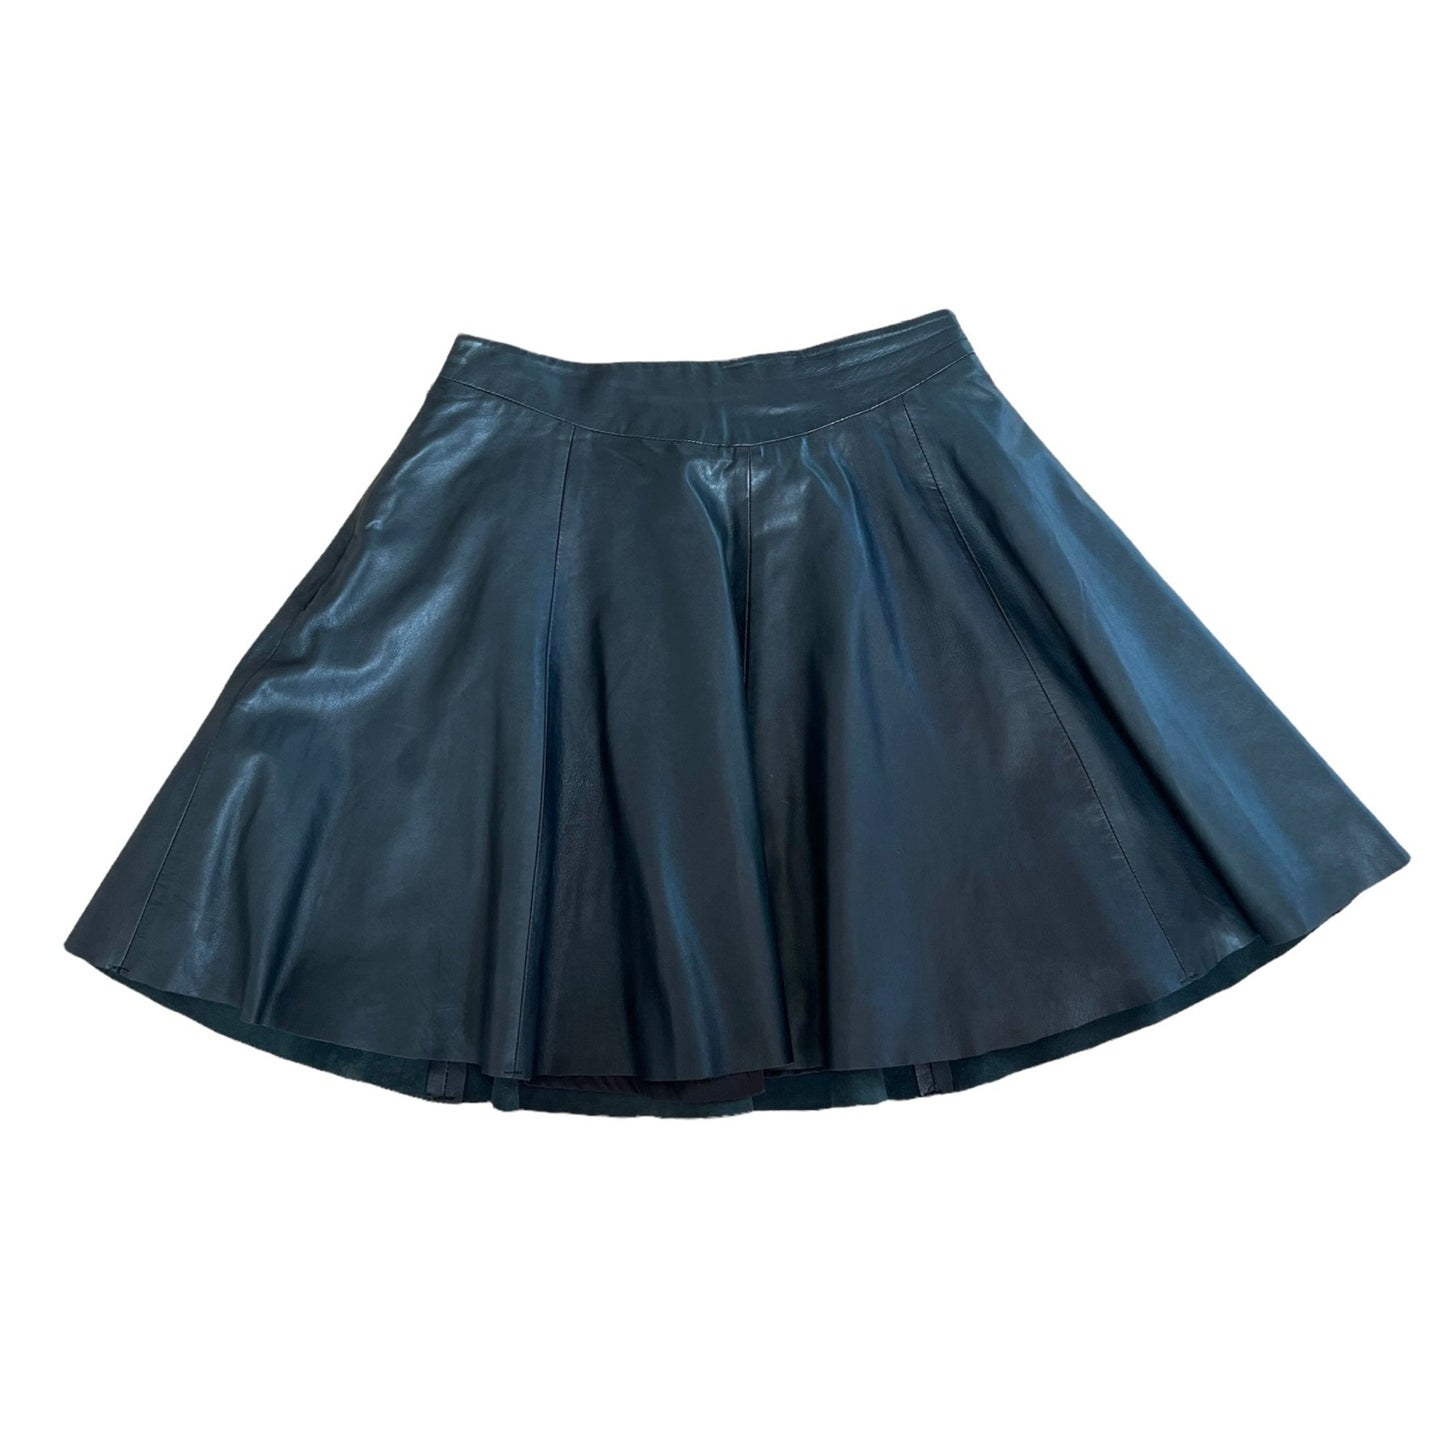 Black Leather Mini Skirt - S